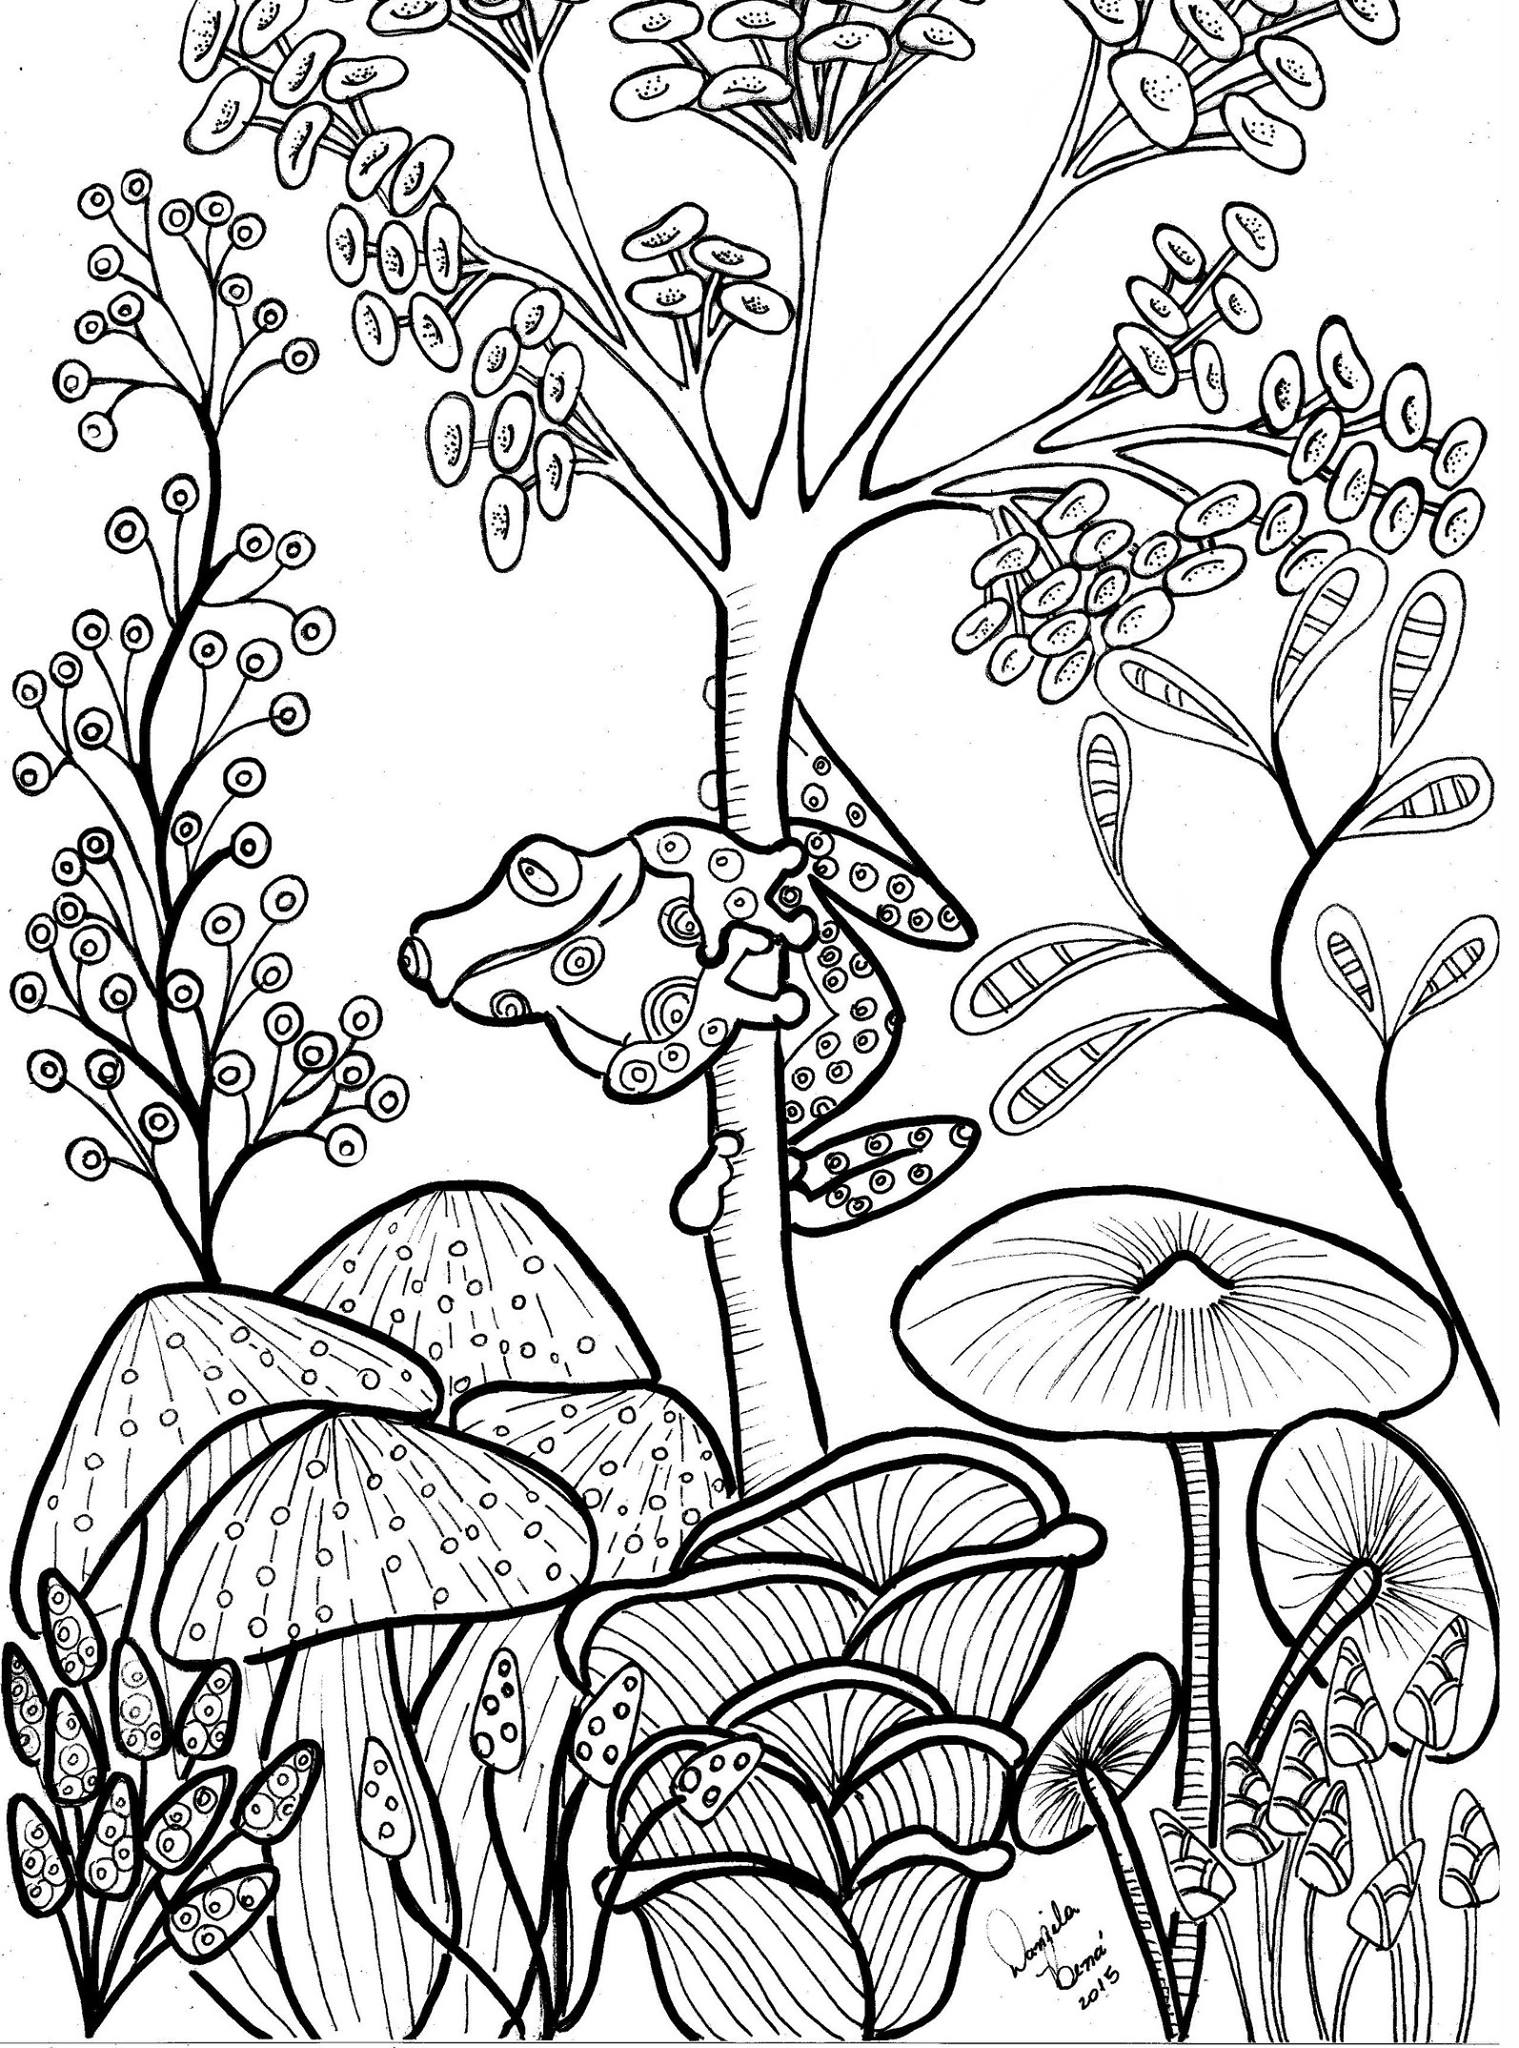 Cute Mushroom Coloring Pages at GetColorings.com | Free printable